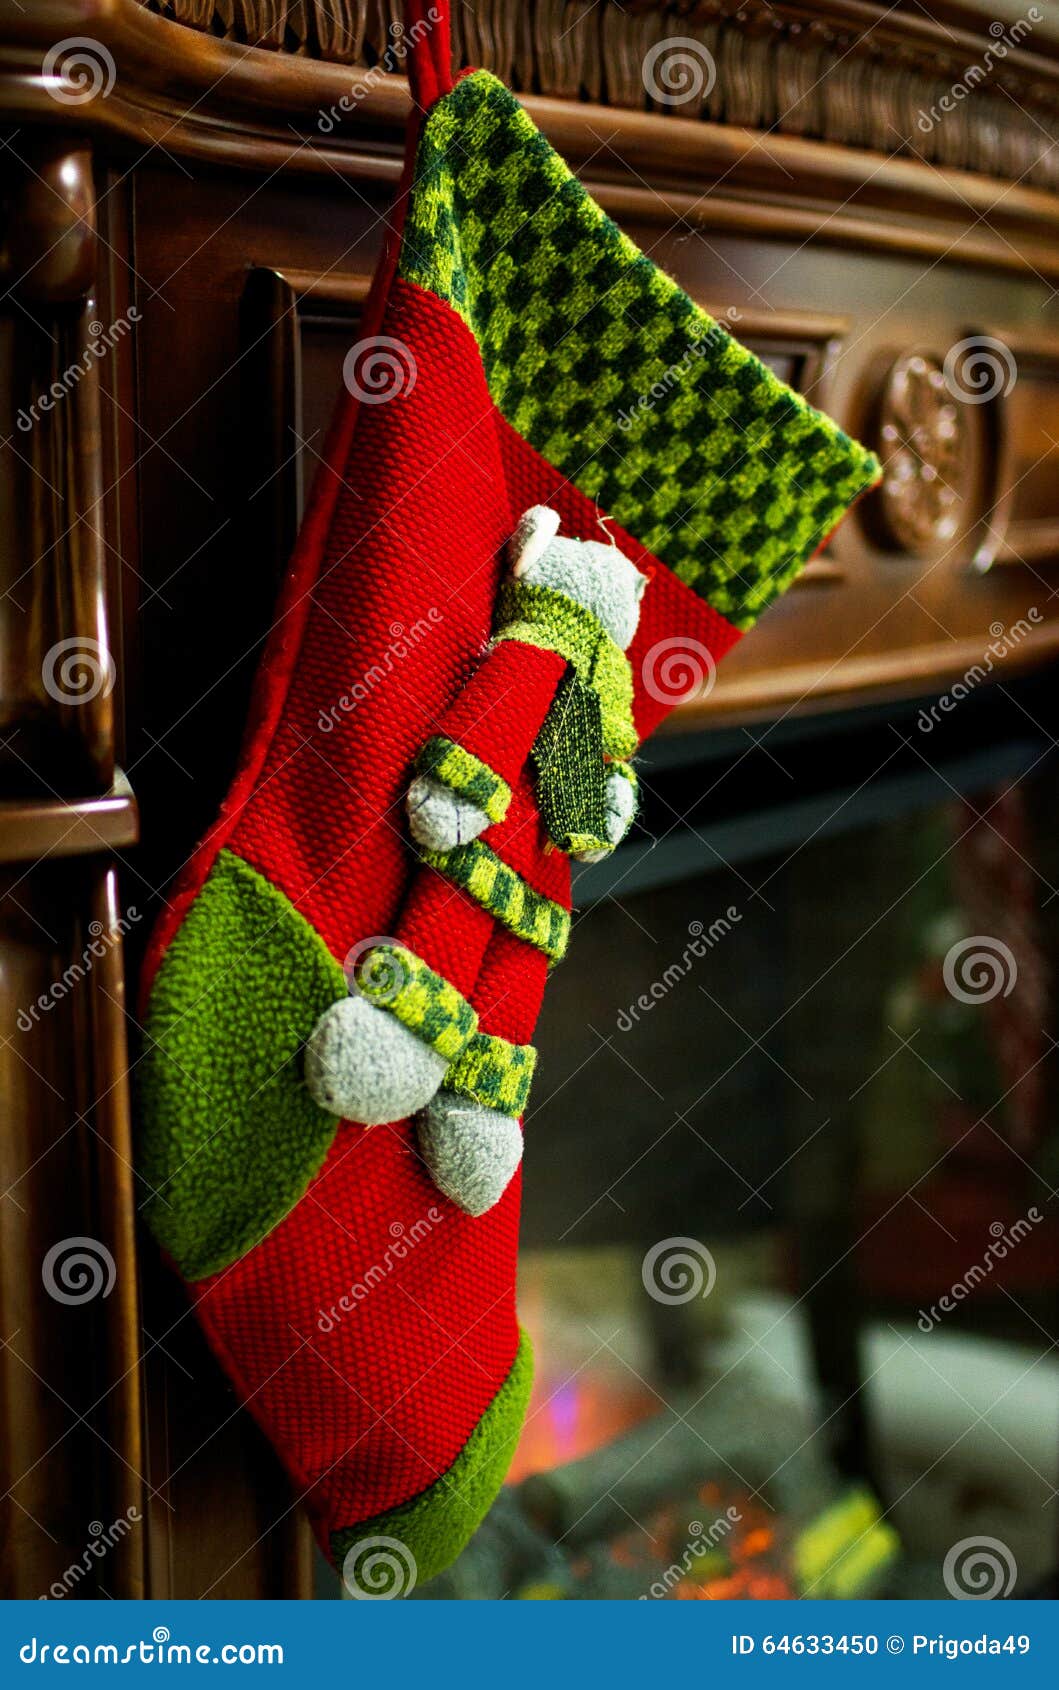 Sock stock photo. Image of present, donative, holliday - 64633450